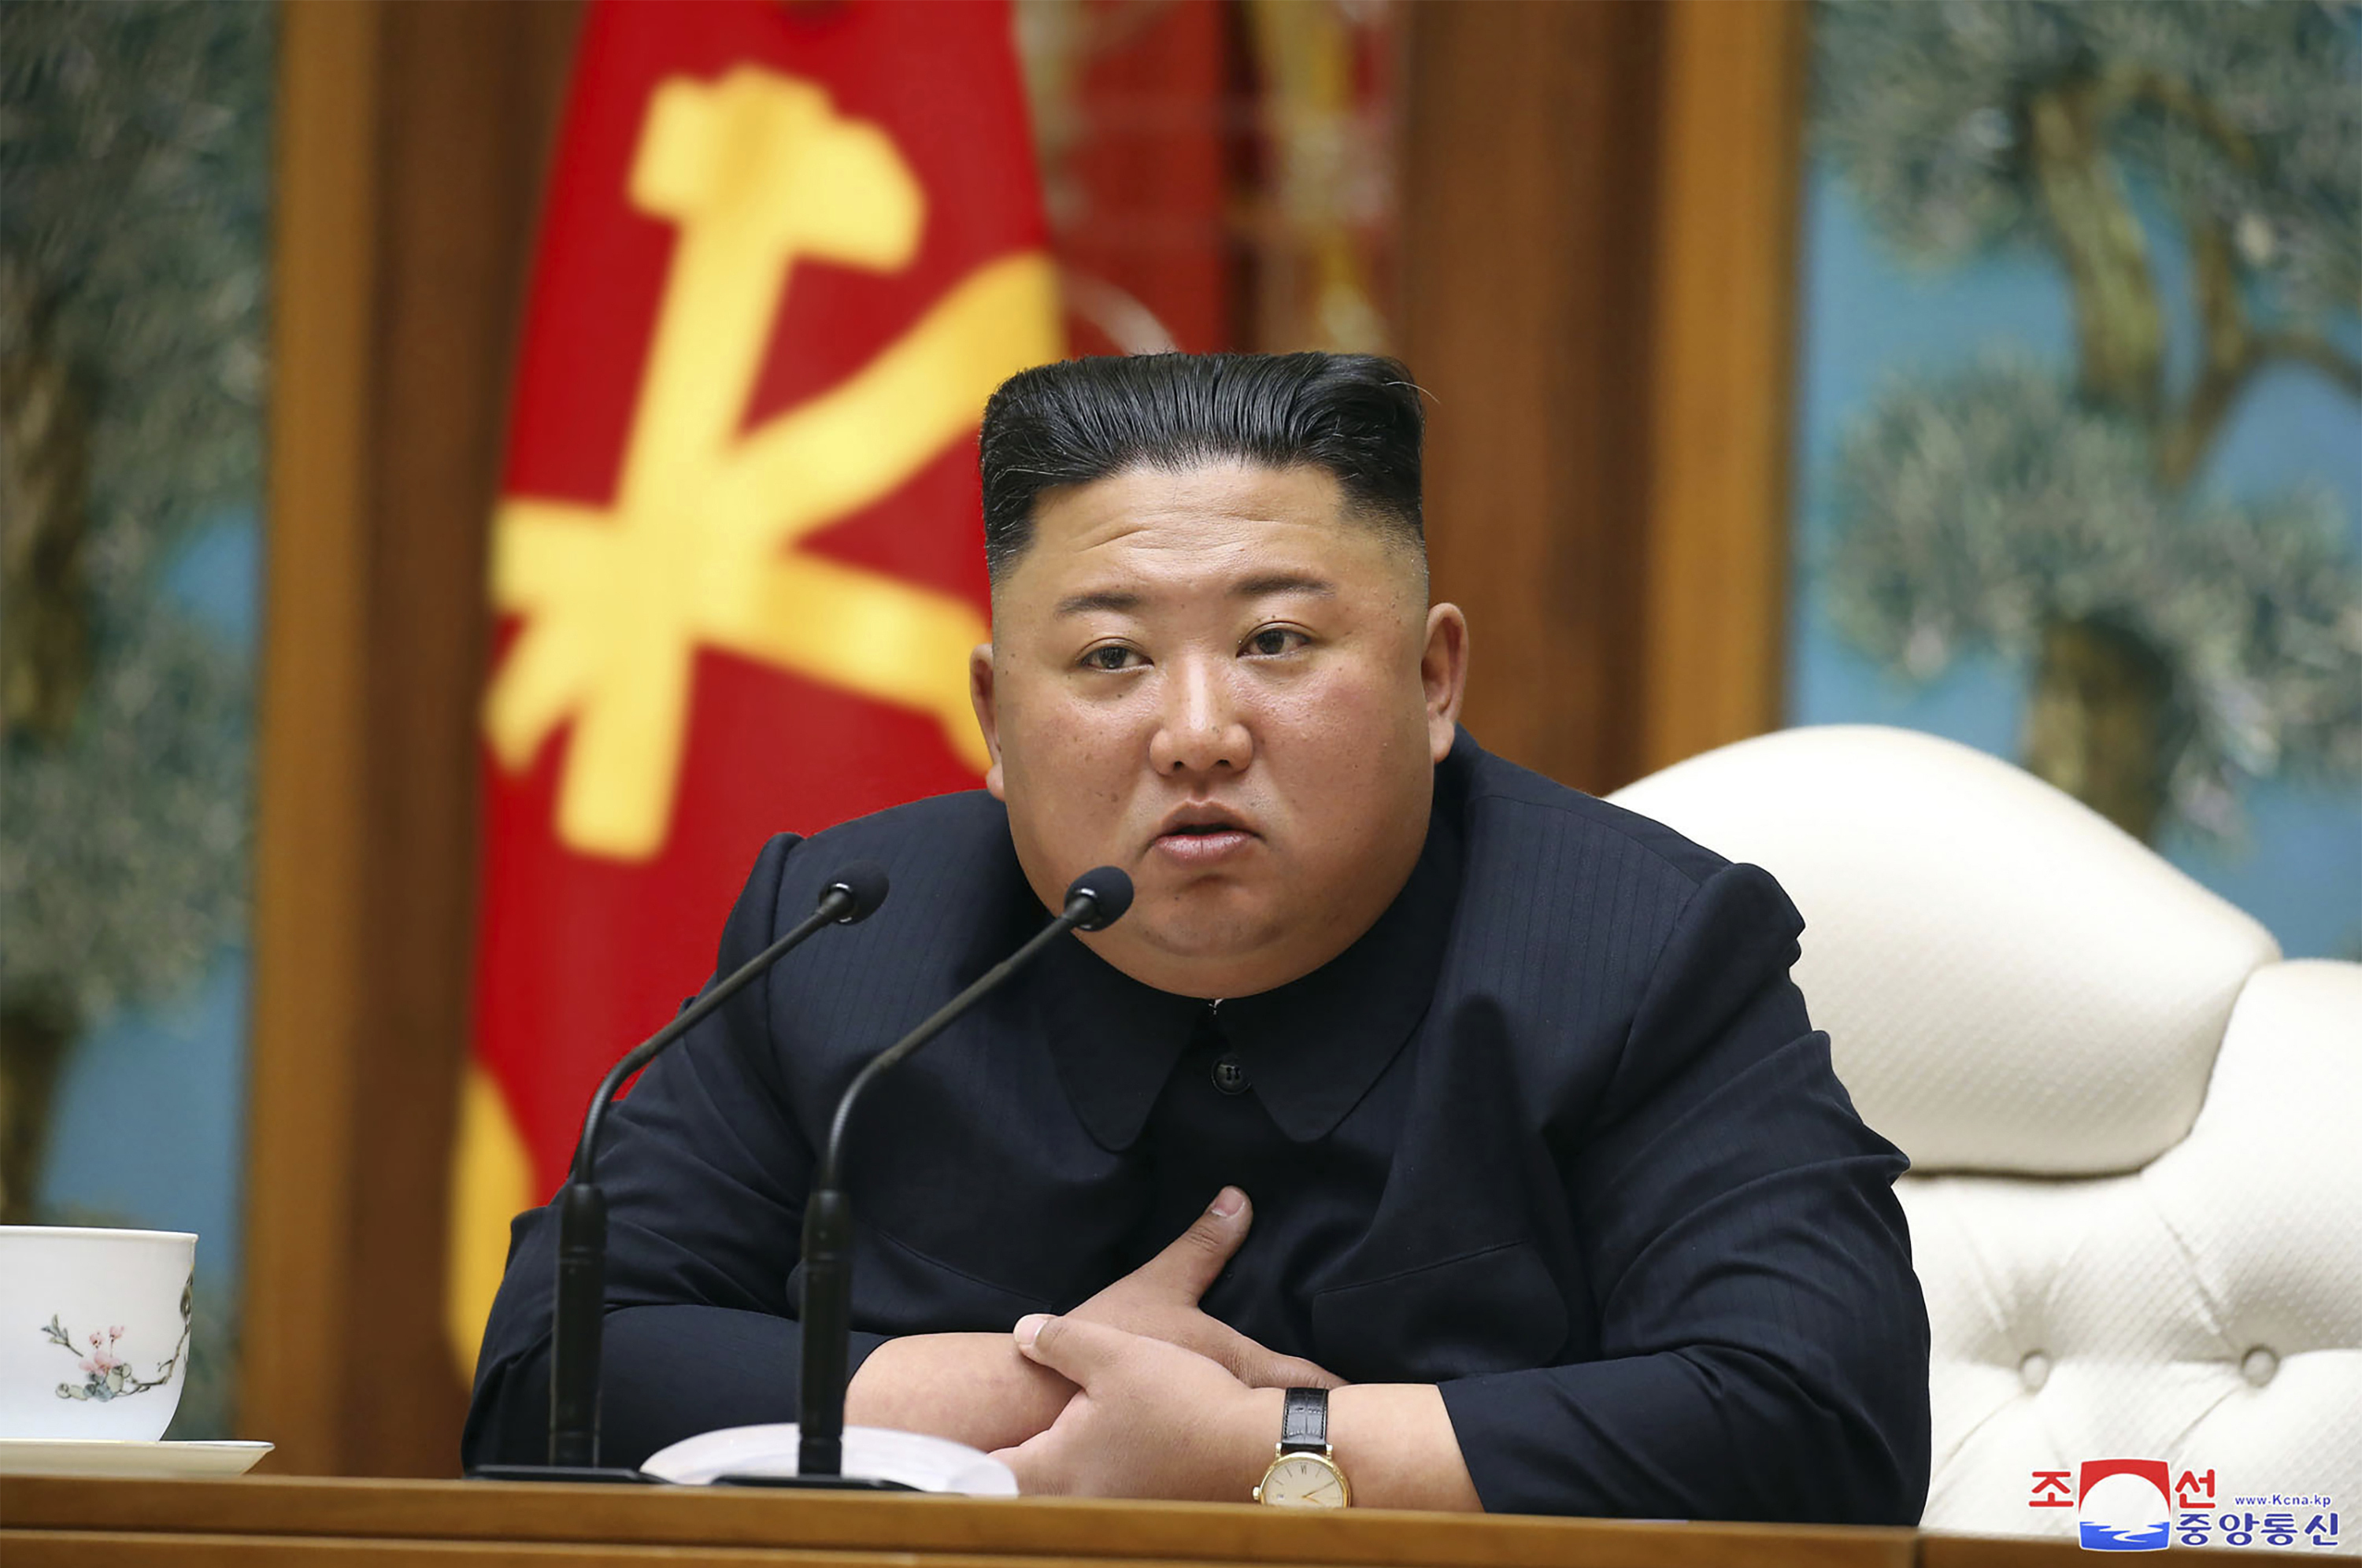 A Prominent North Korean Defector is 99% Certain Kim Jong Un Is Dead